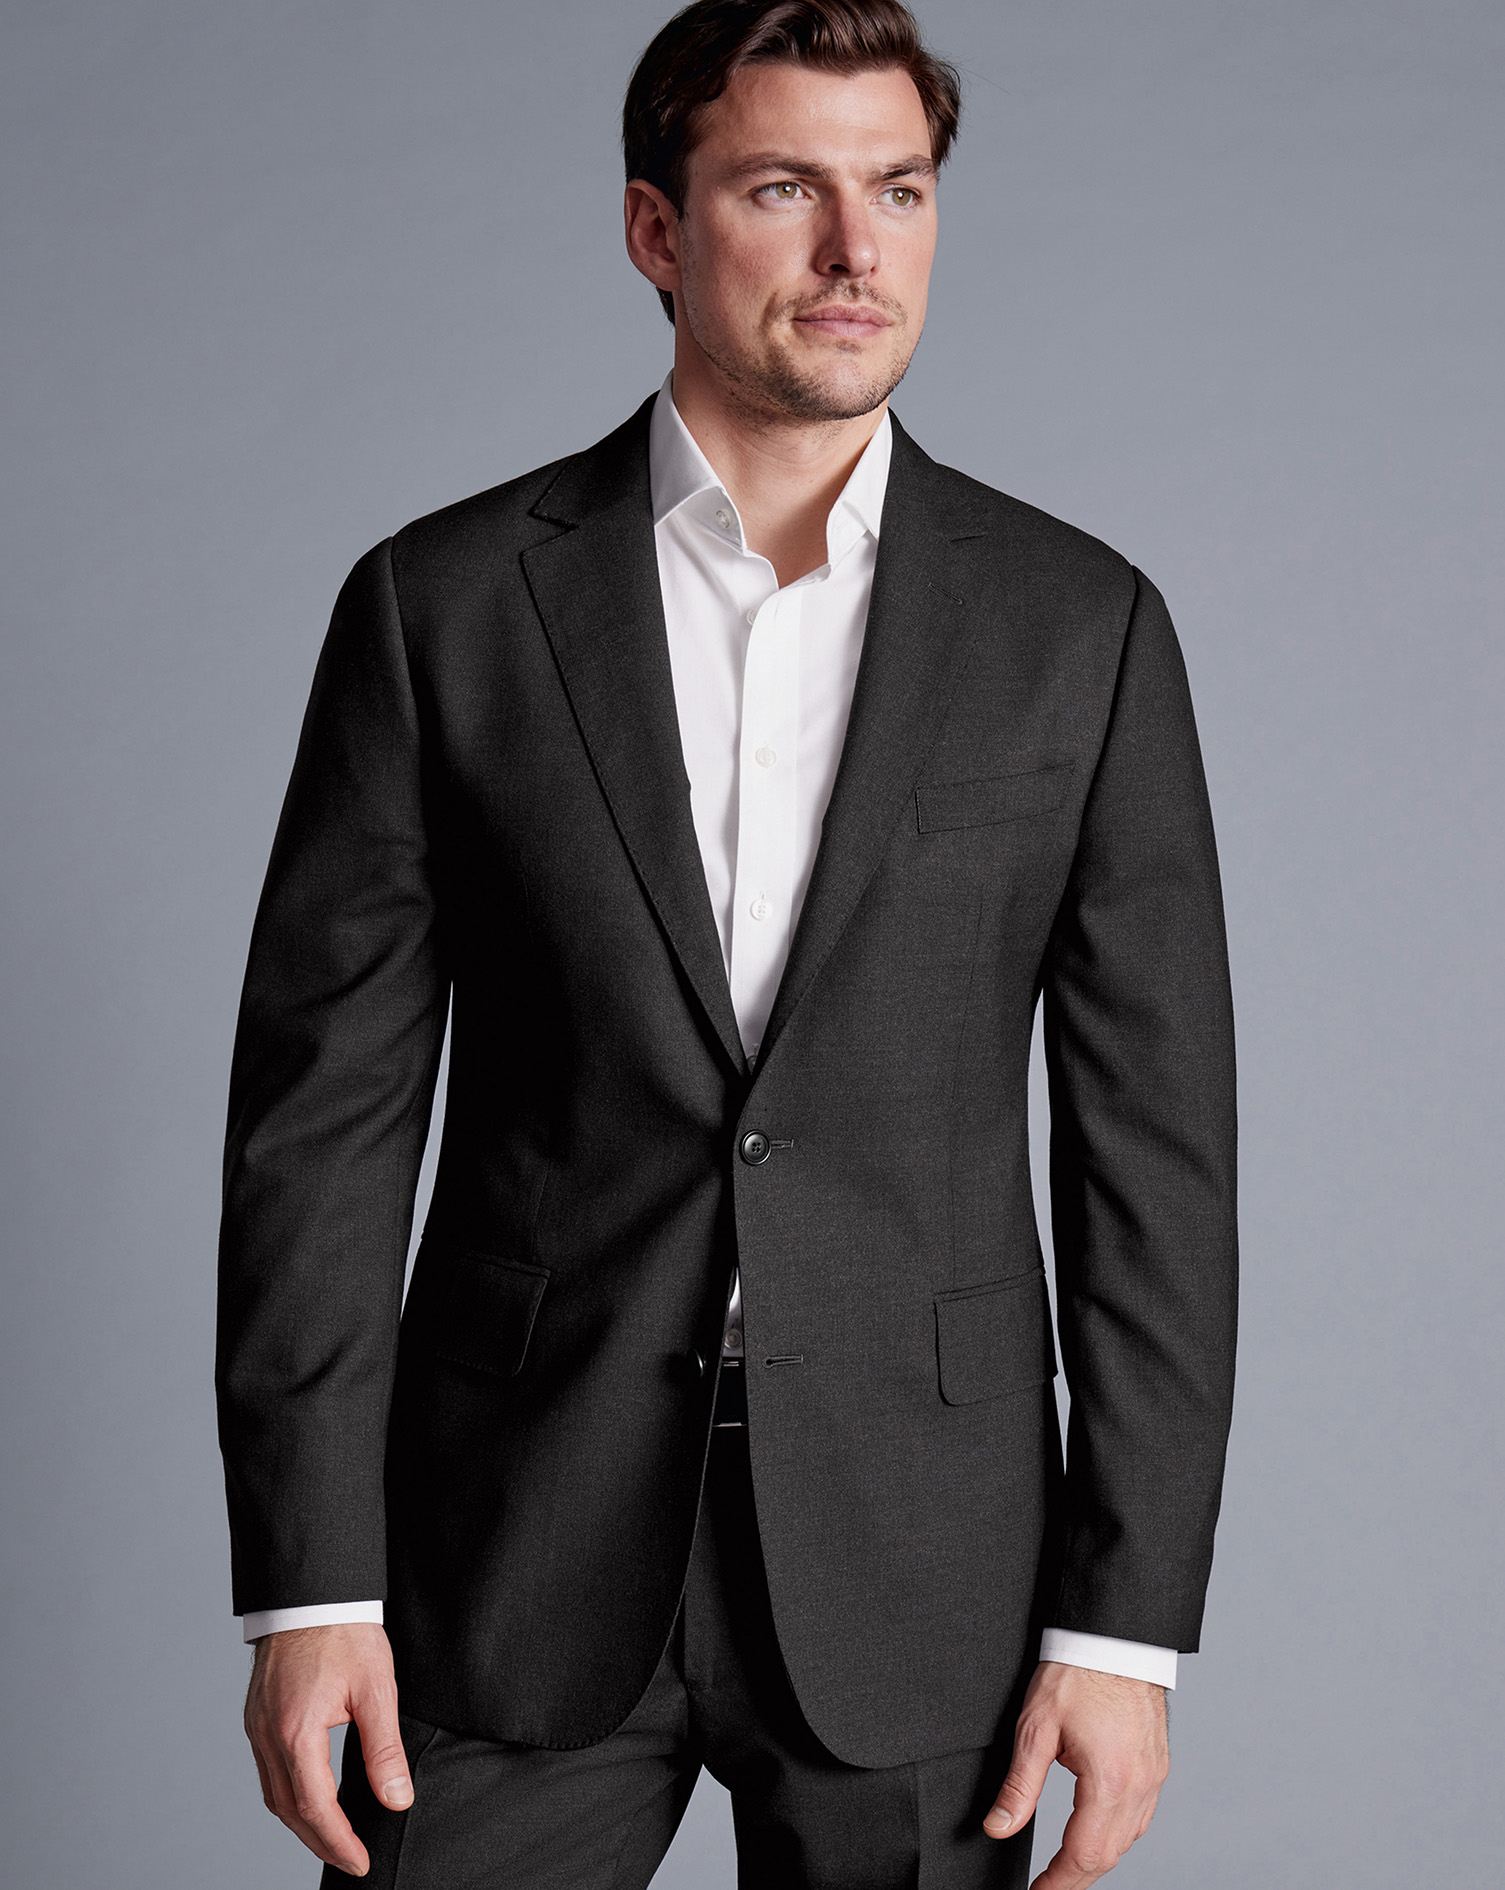 Men's Charles Tyrwhitt Italian Luxury Suit na Jacket - Charcoal Grey Size 46R Wool
